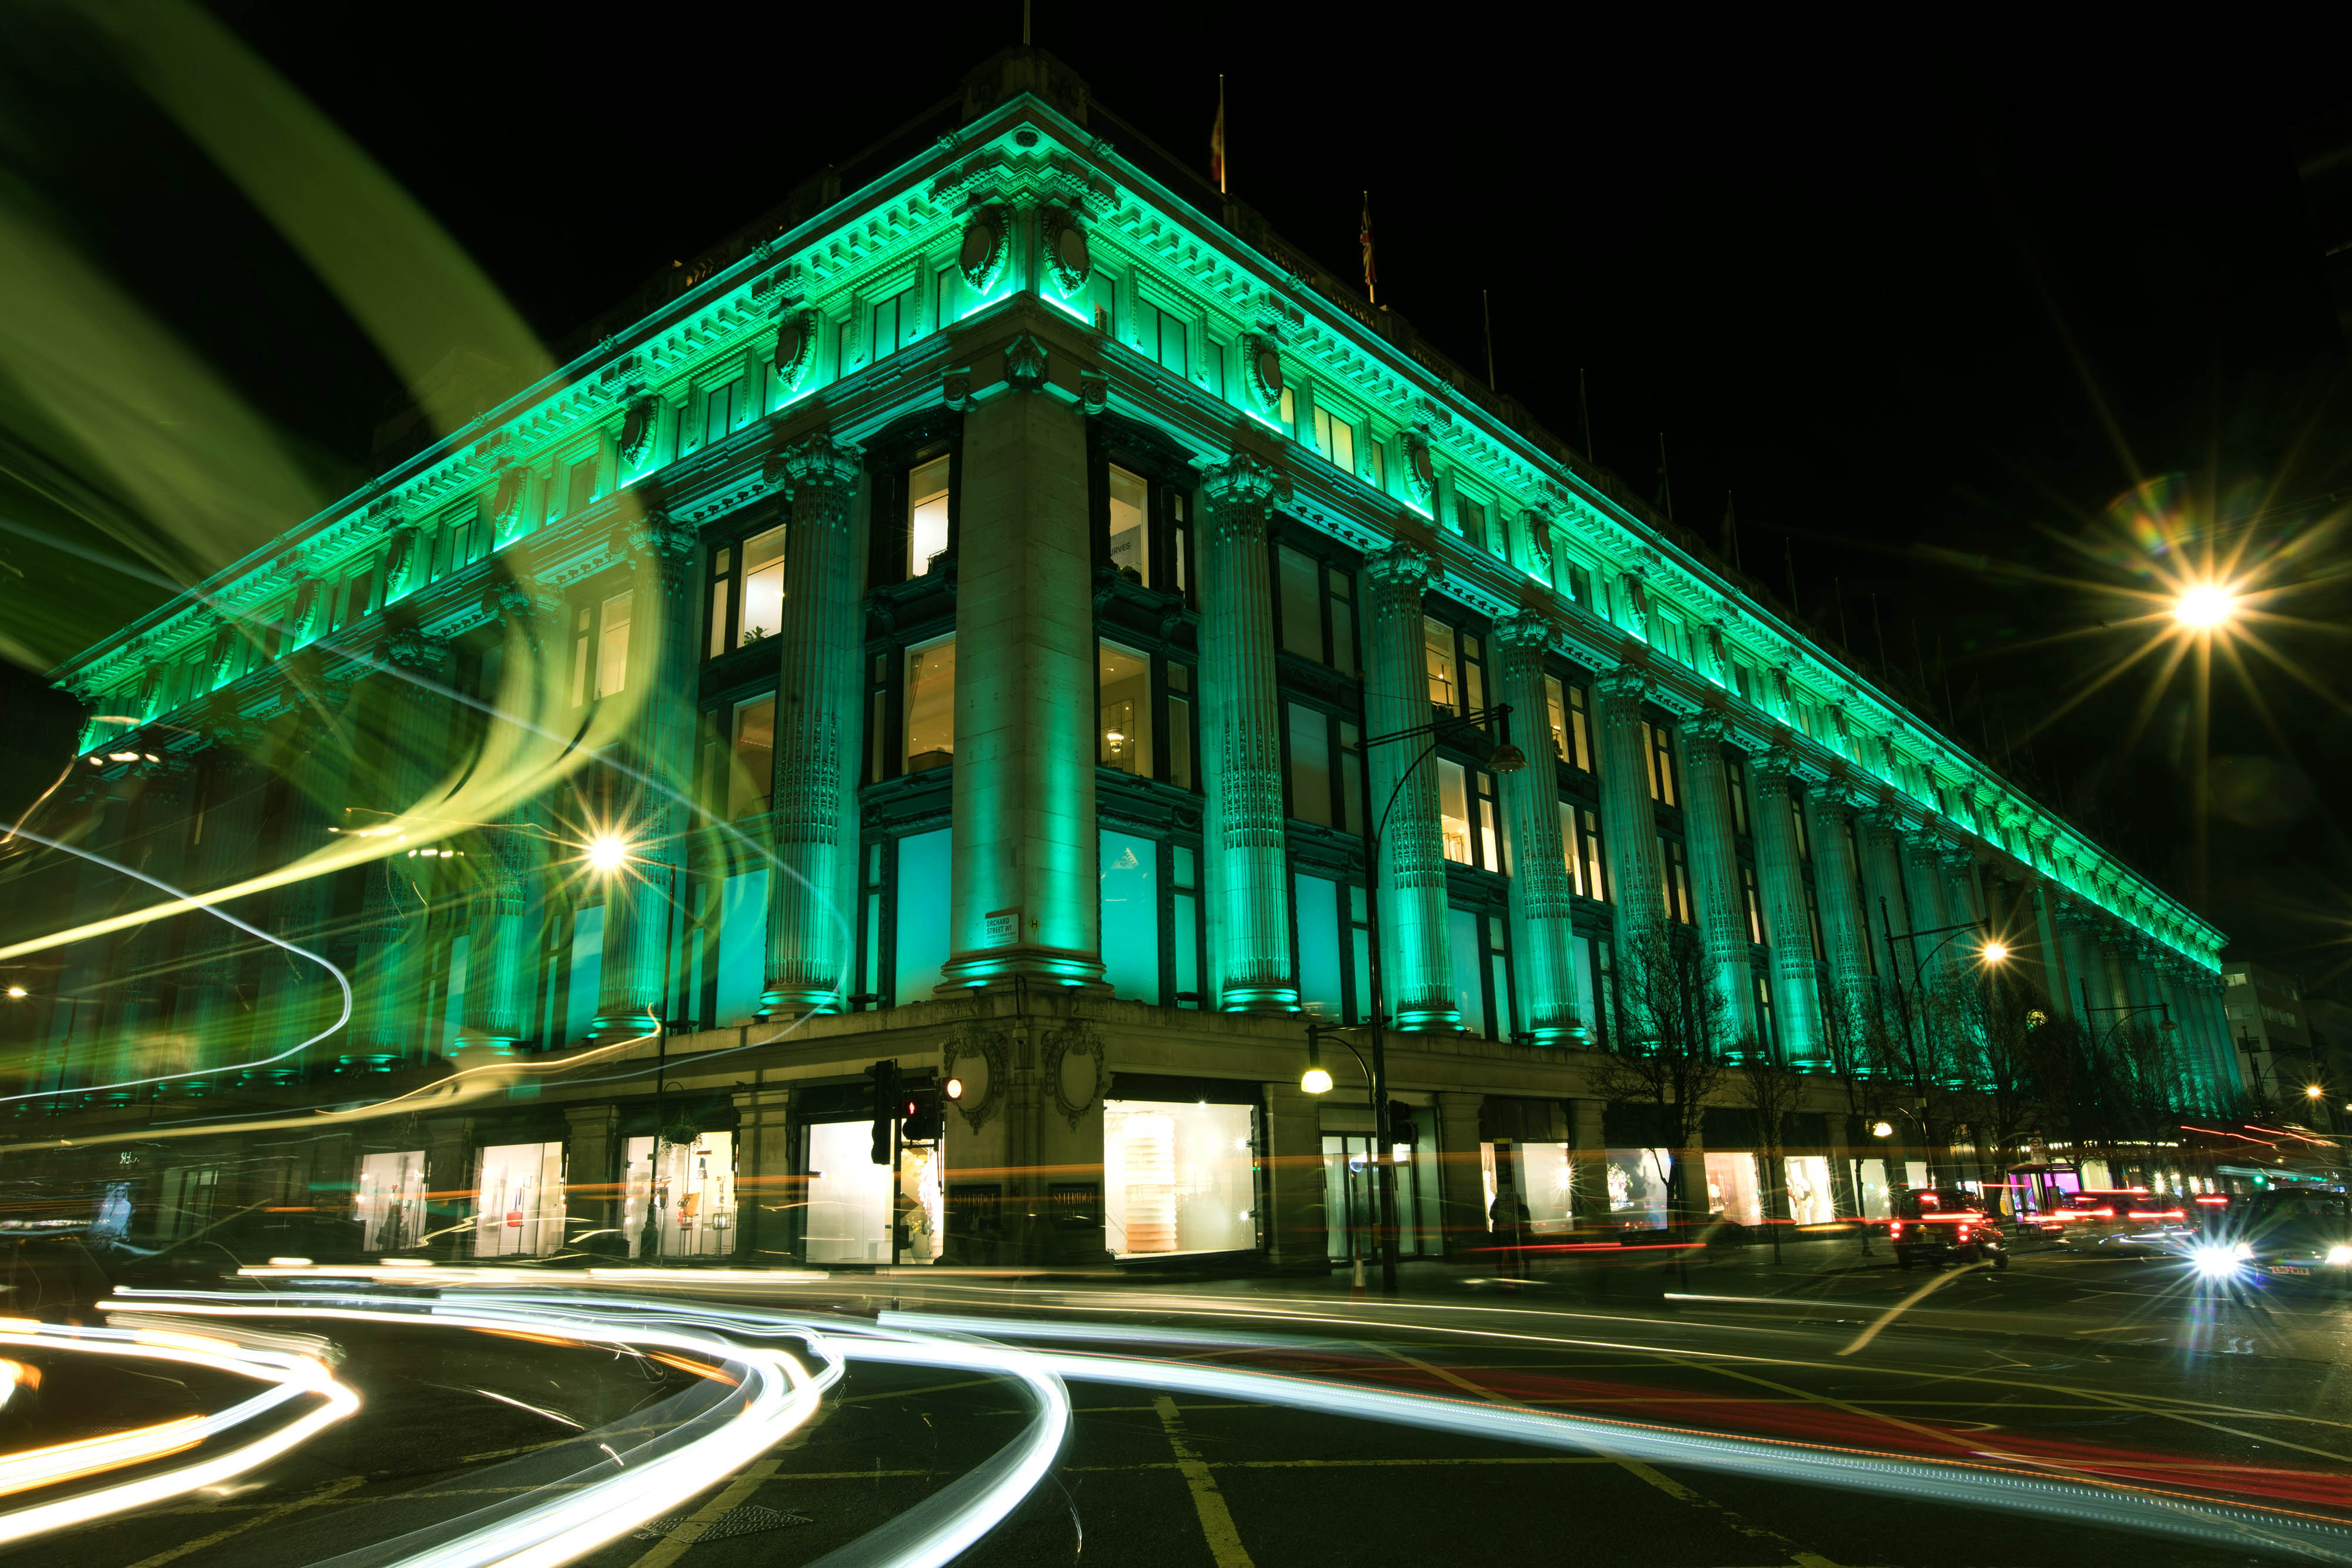 Selfridges in London joined Tourism Ireland’s Global Greening initiative